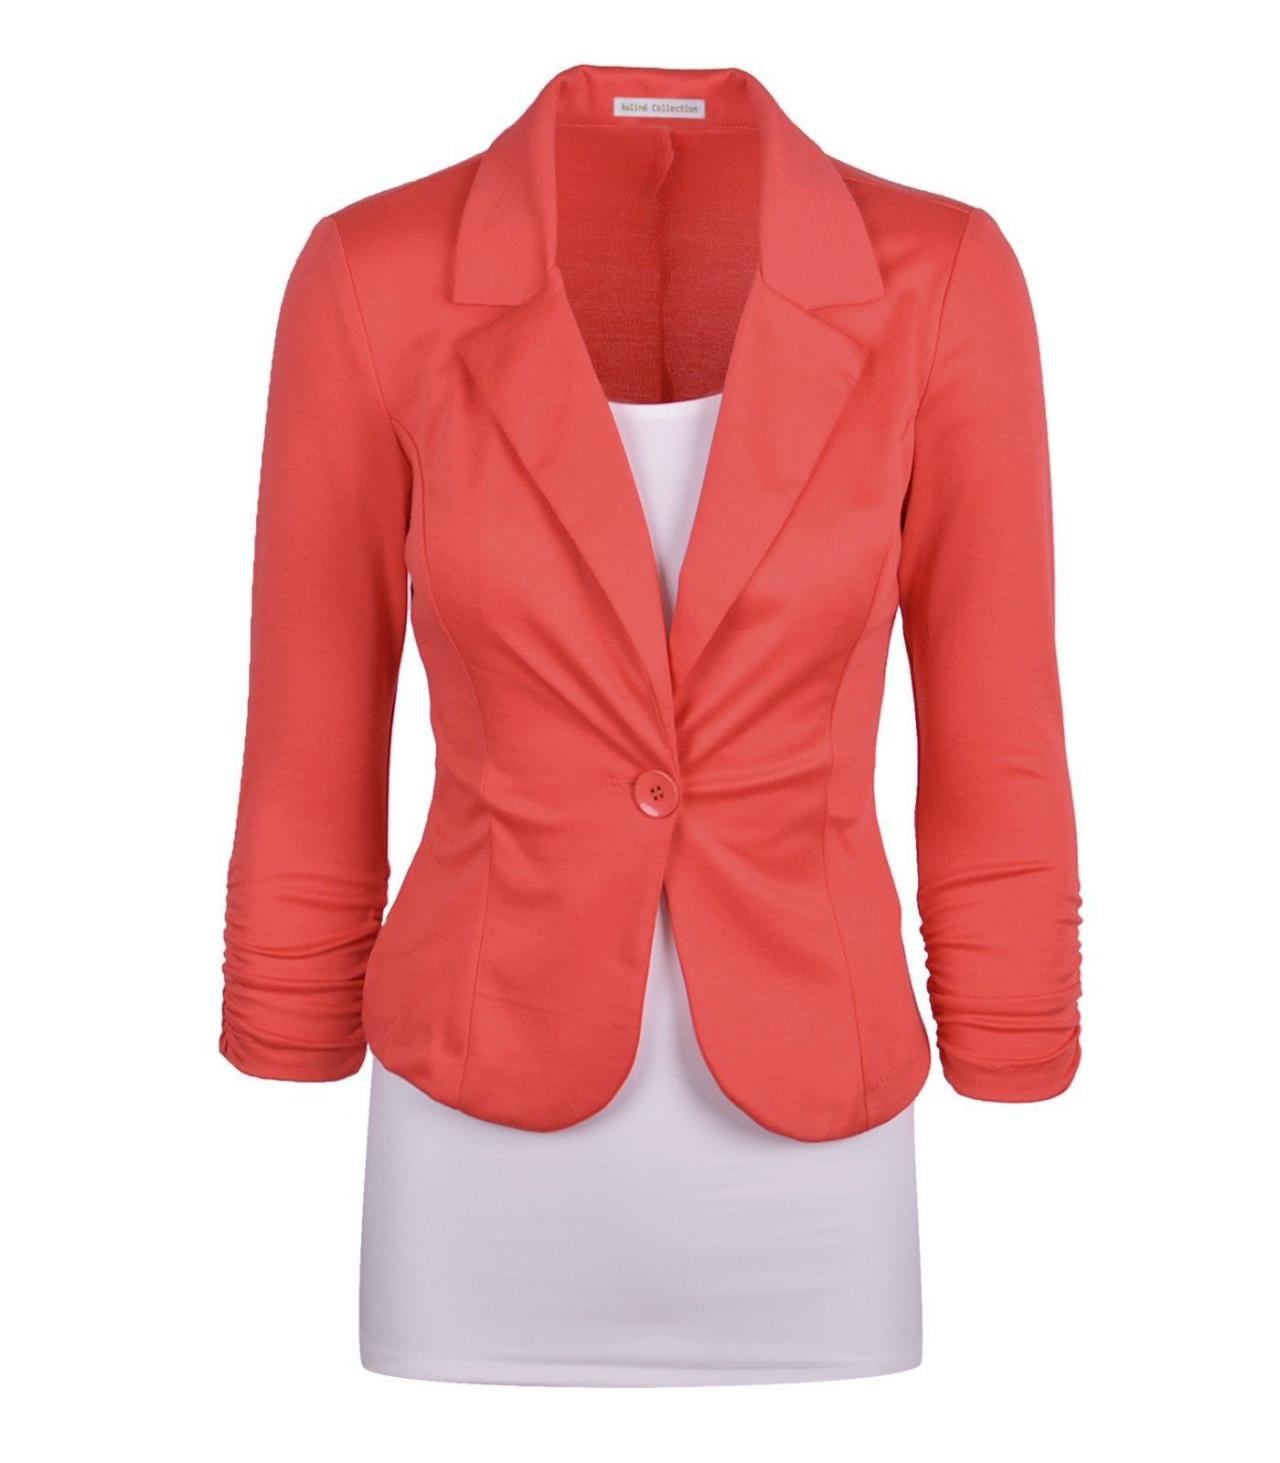 Fashion Spring Women Slim Blazer Coat Long Sleeve One Button Casual Suit Jacket Ladies Work Wear watermelon red